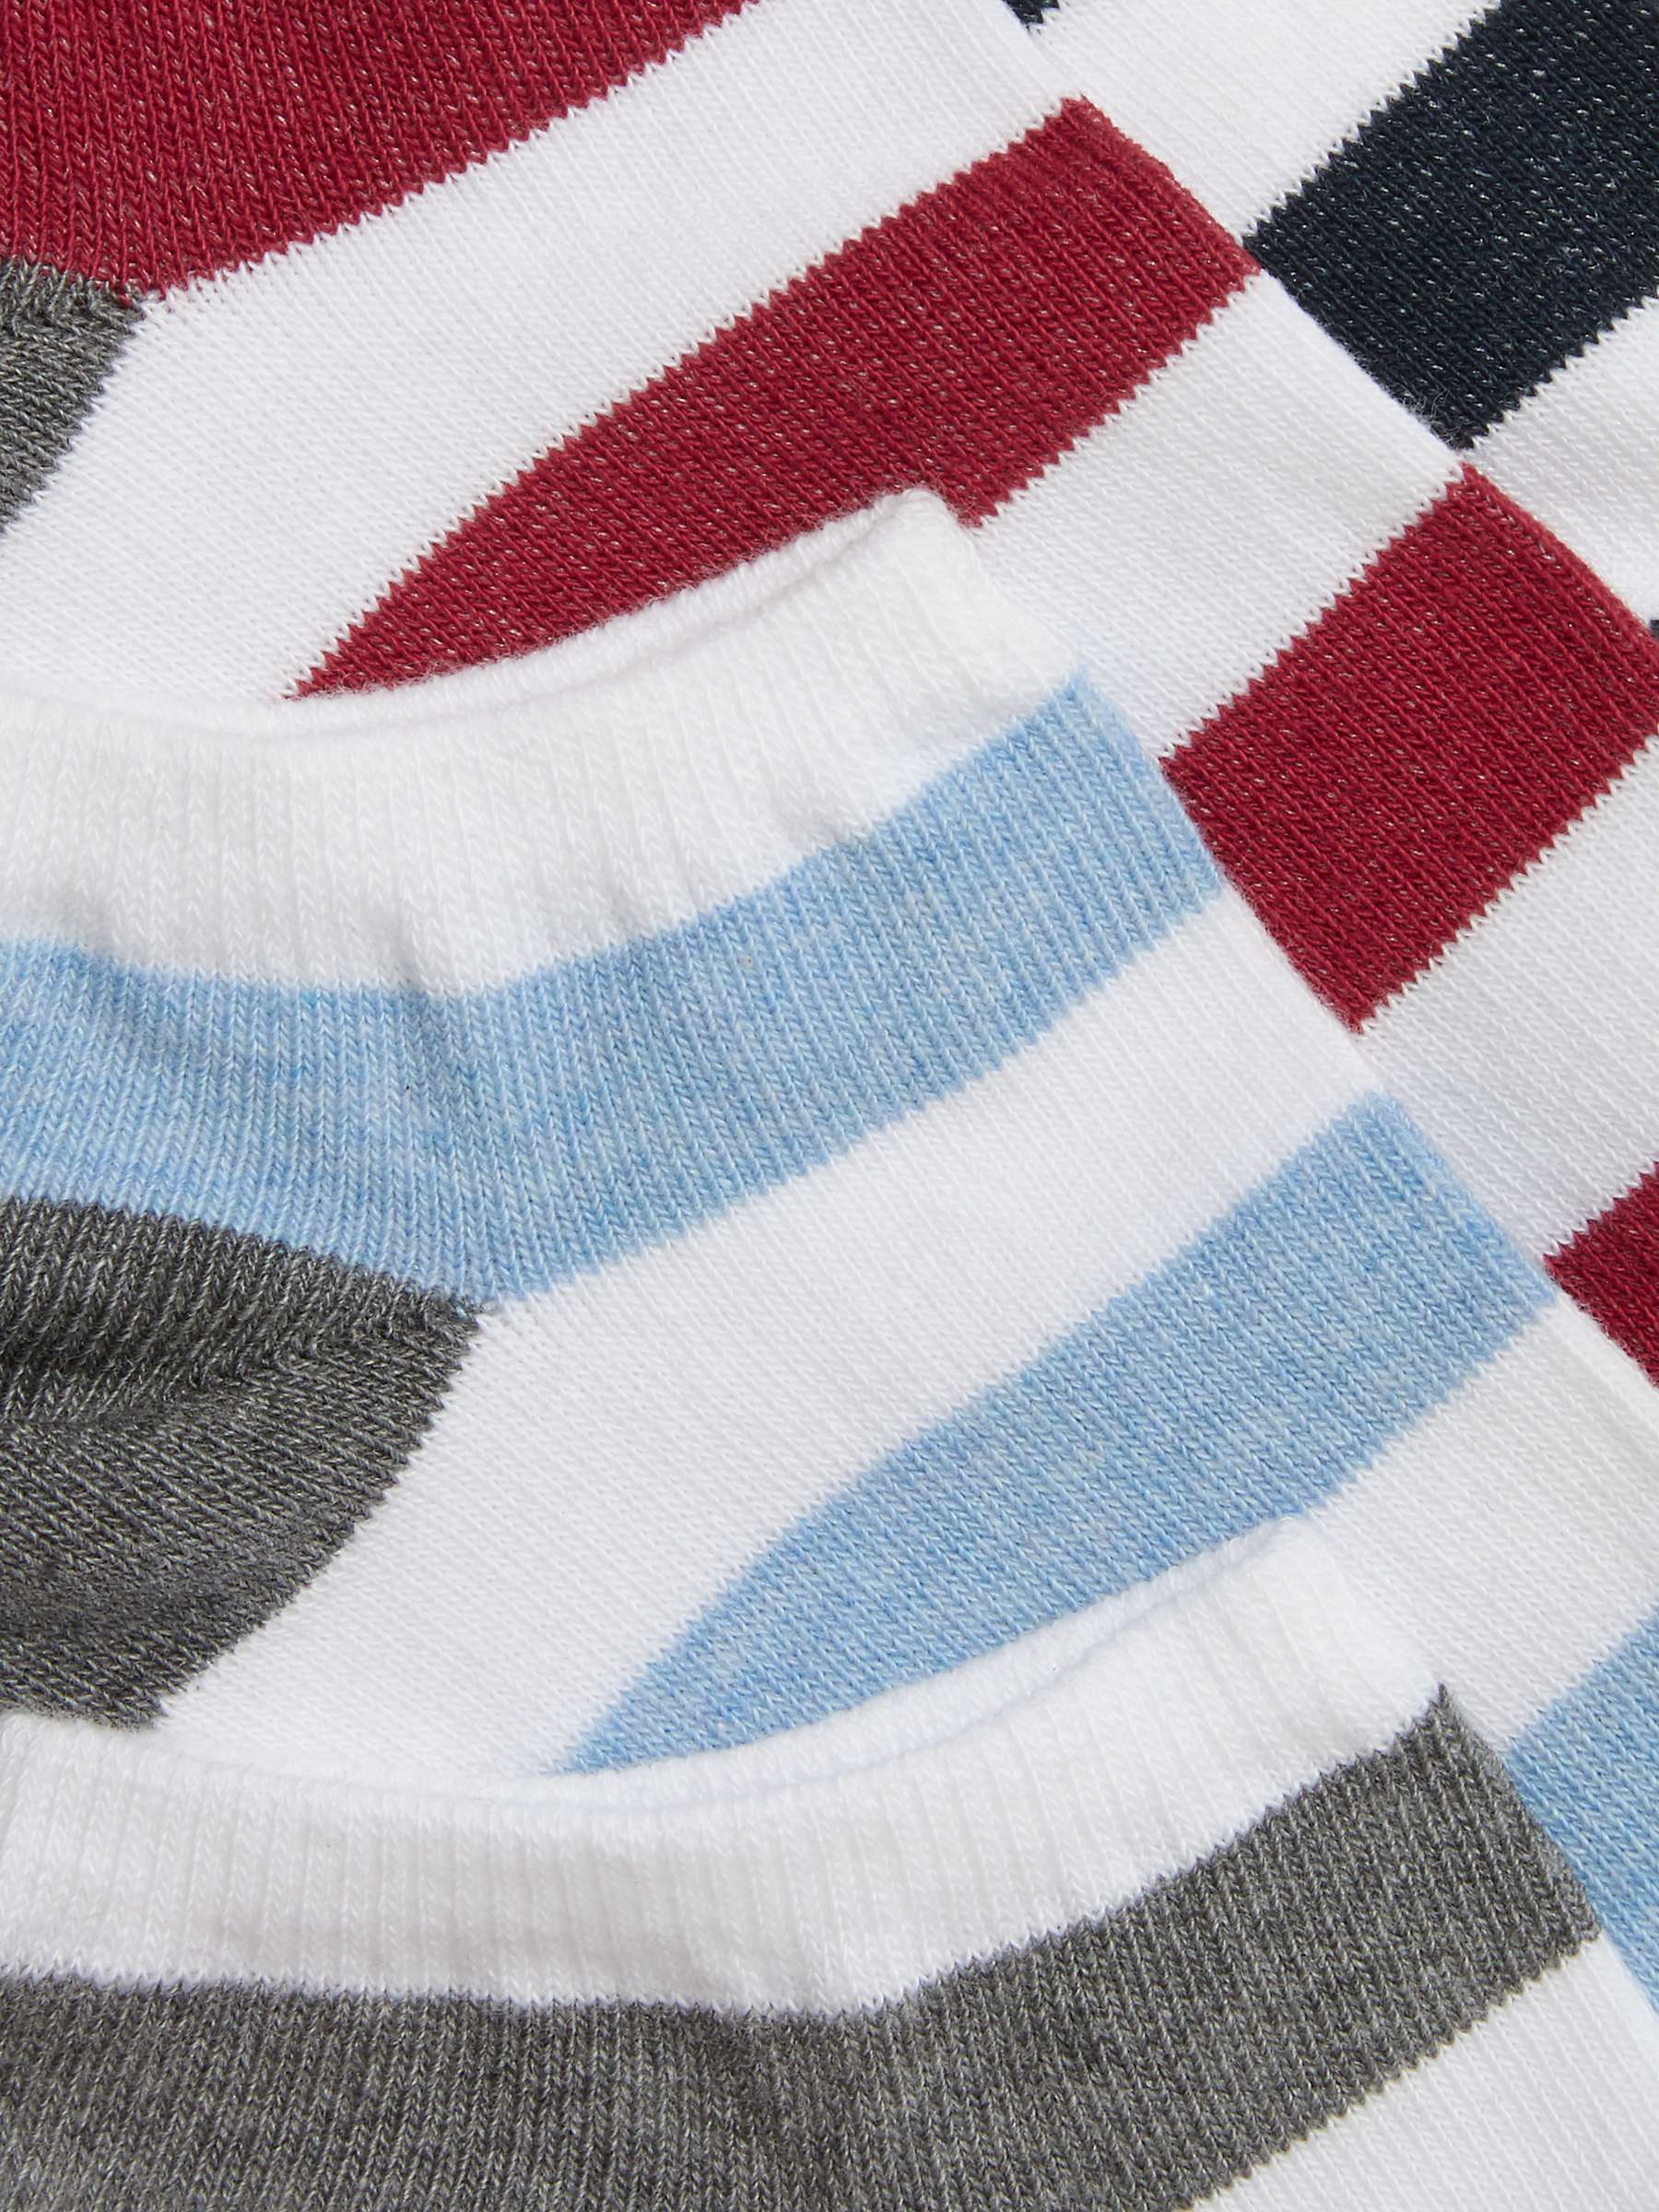 Buy John Lewis Rugby Stripe Trainer Socks, Pack of 4, Black/Red/Blue/Grey Online at johnlewis.com